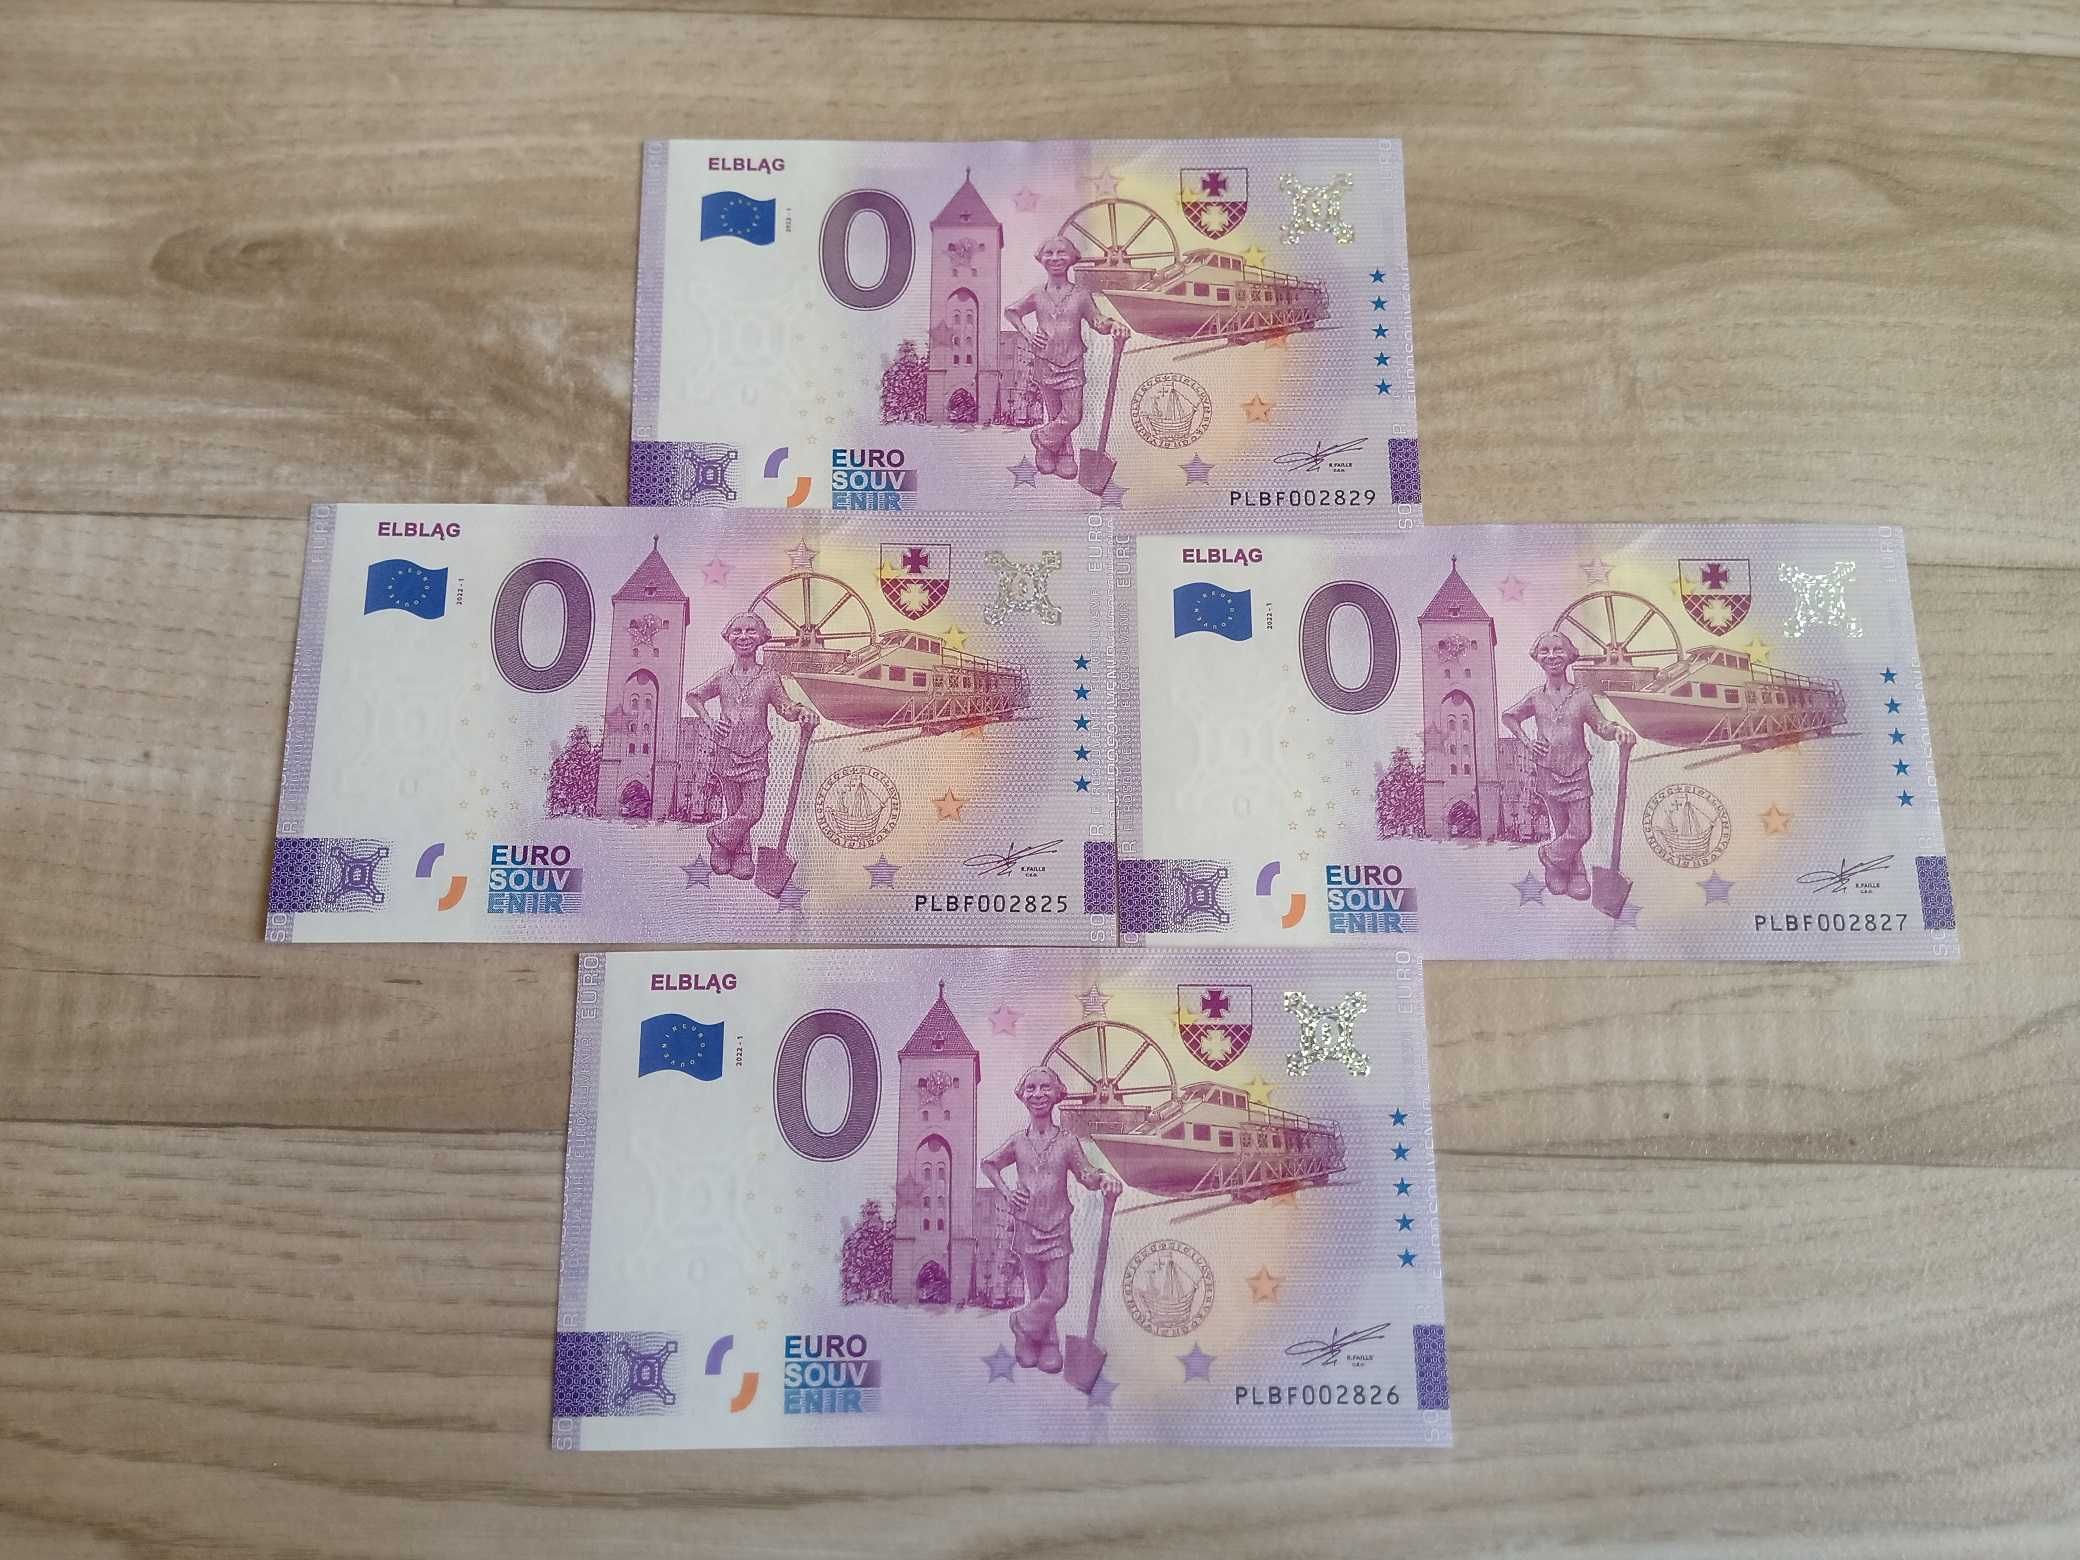 0 Euro - Elbląg, piękny banknot kolekcjonerski. Gratisy :)